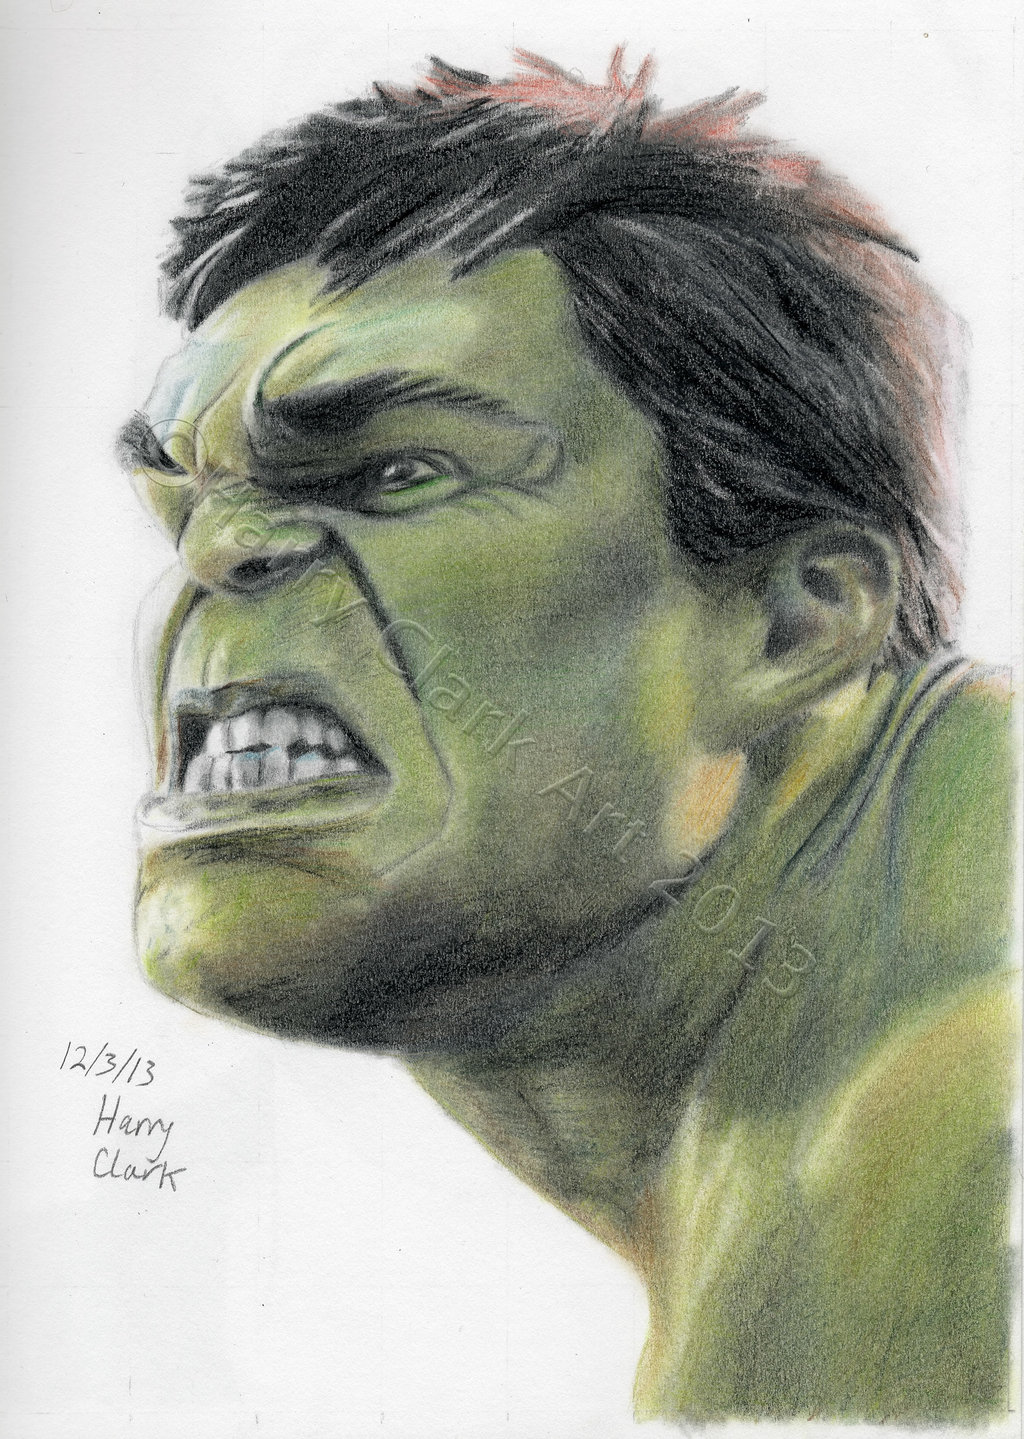 The Incredible Hulk Drawings Face - Hulk Face Drawing. 